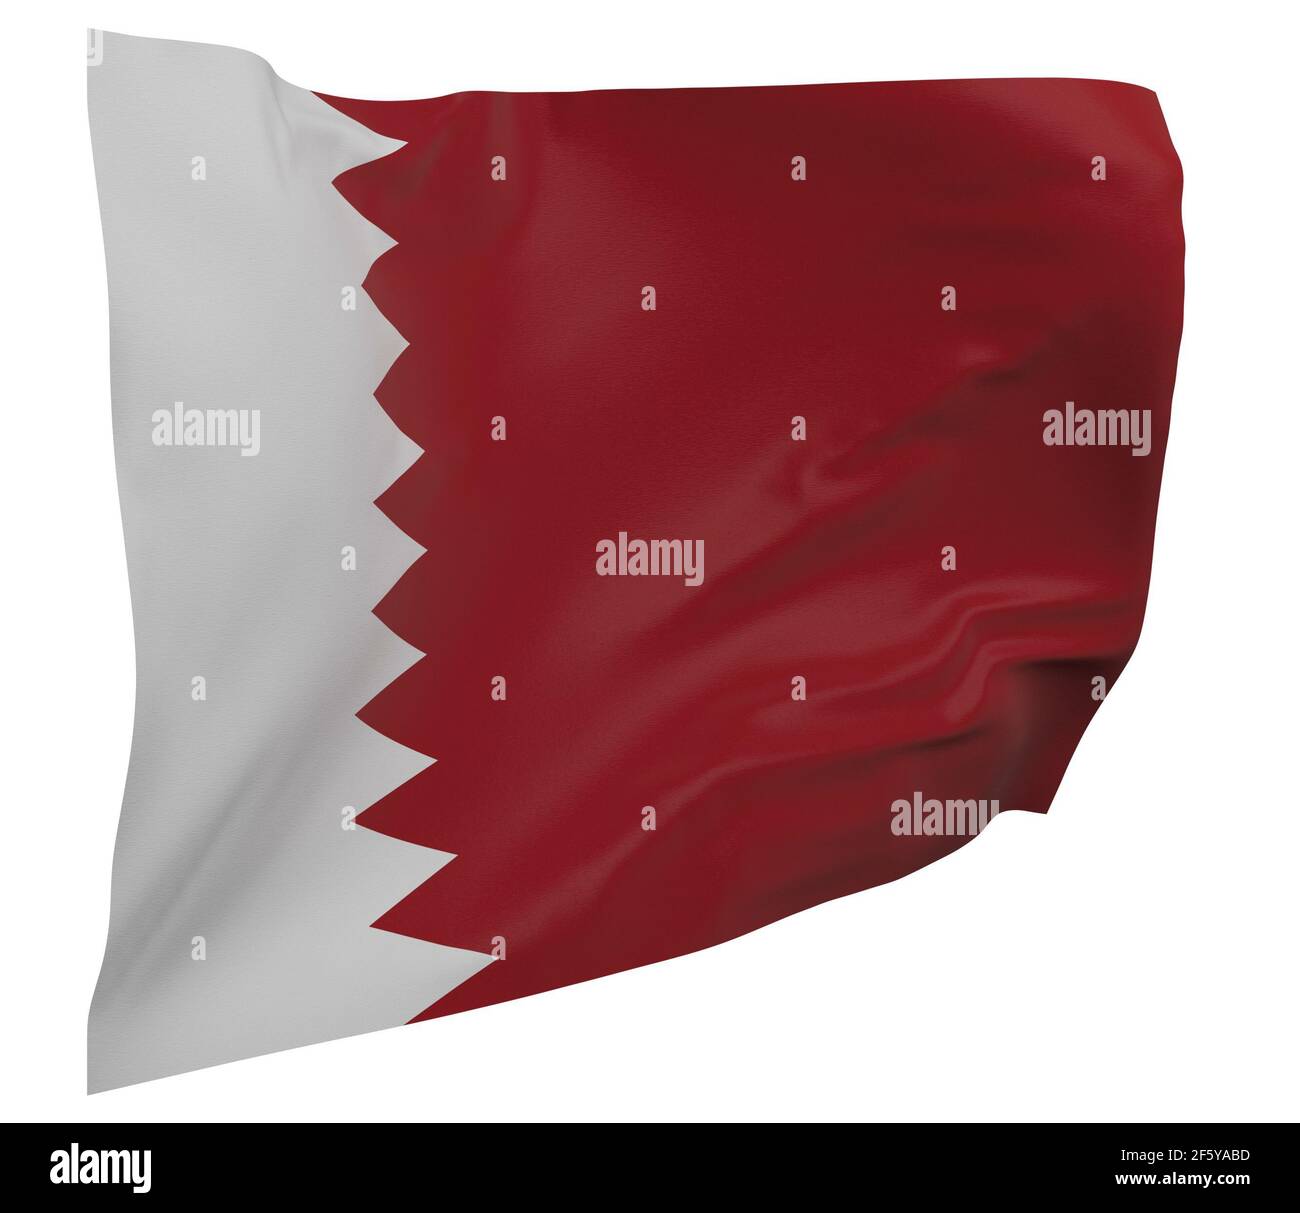 Qatar flag isolated. Waving banner. National flag of Qatar Stock Photo